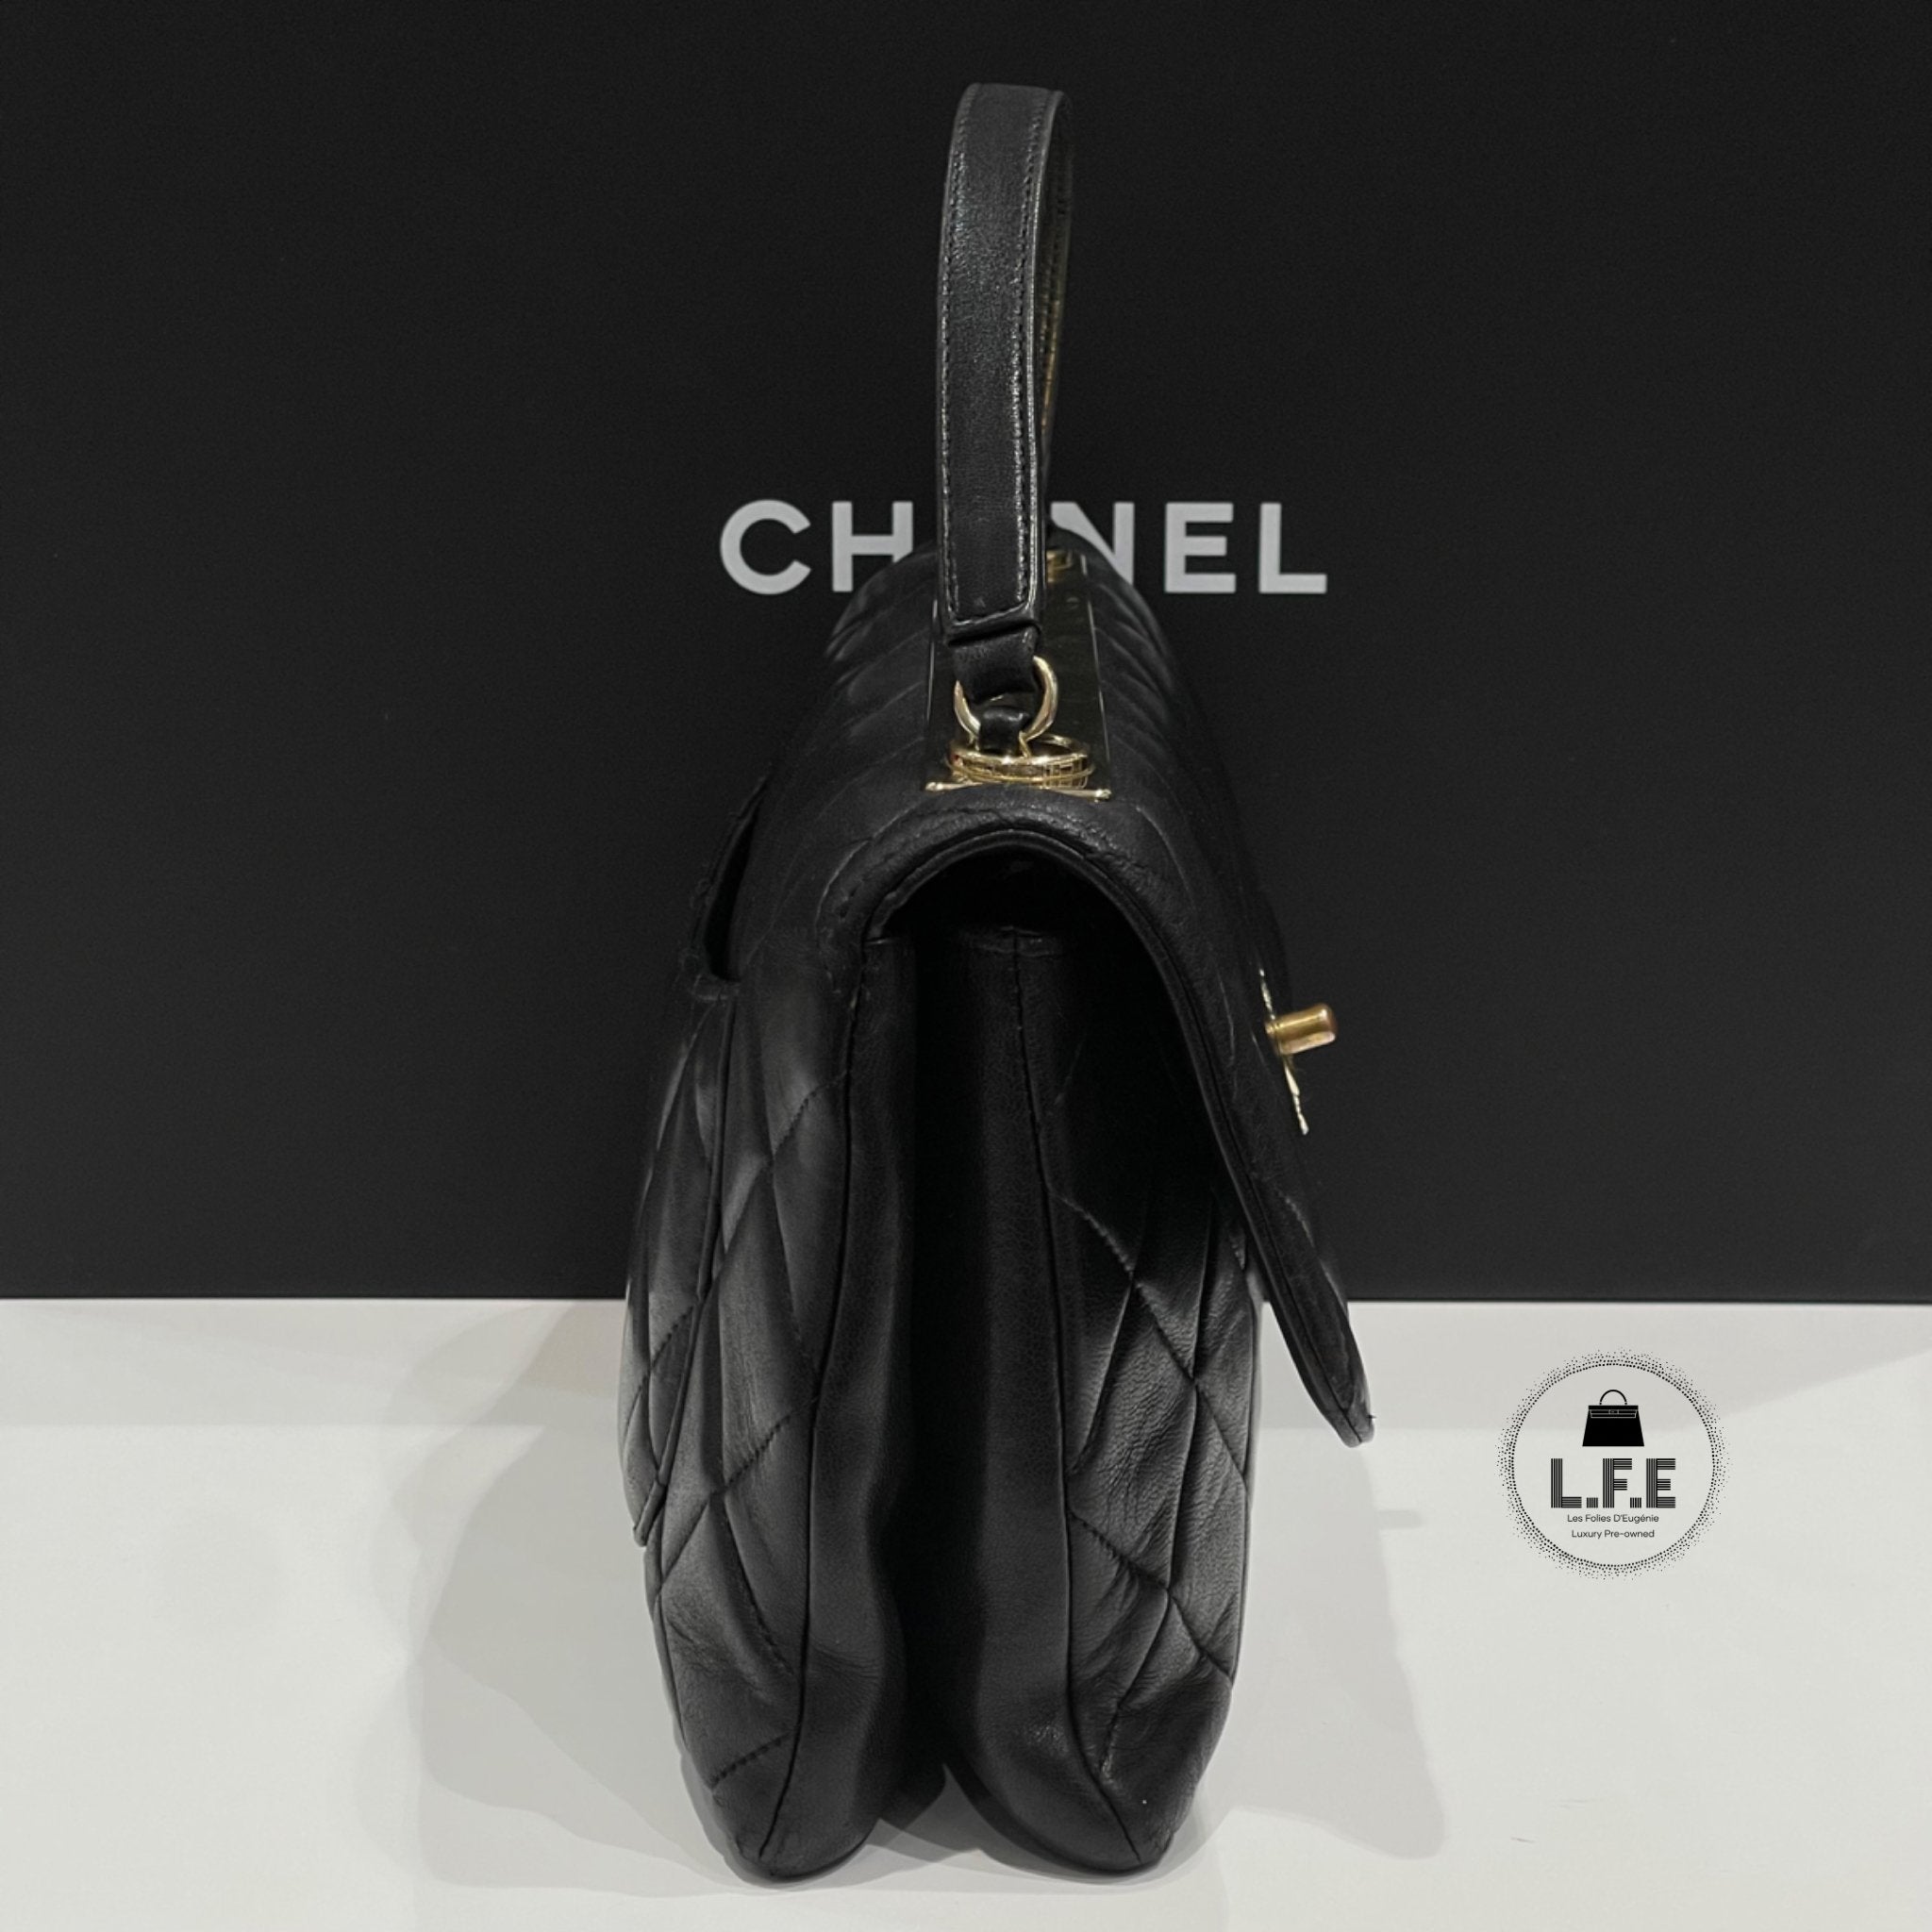 Chanel - Trendy chain flap bag